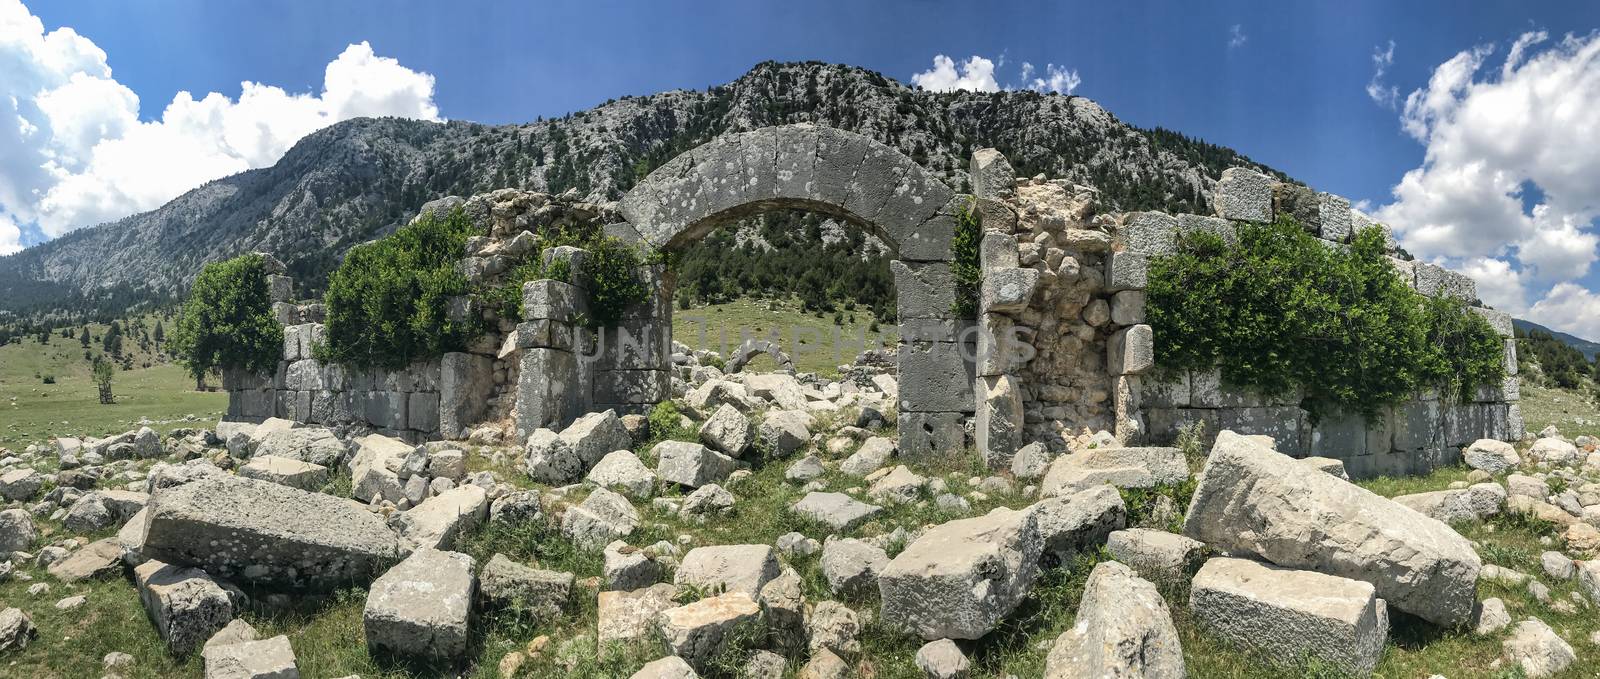 Tolhan;old Seljuk caravanserai structures by crazymedia007